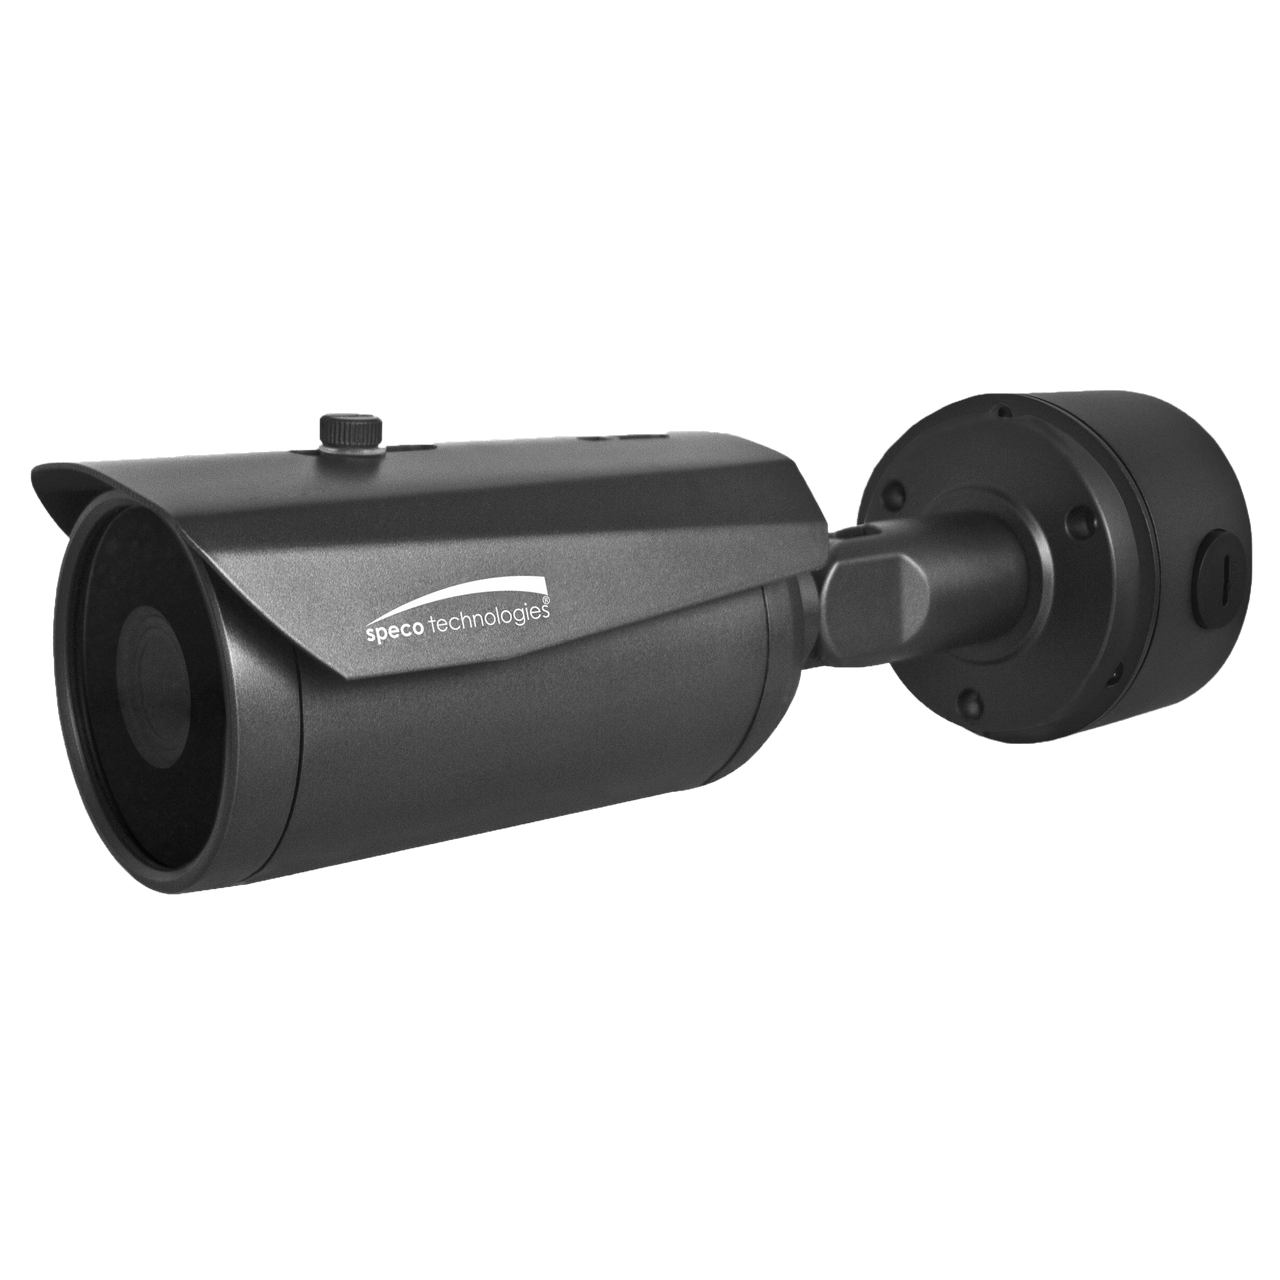 Speco Technologies SPE-O2iB91M 2MP Intensifier IP Bullet Camera, 2.8-12mm Motorized Lens, Dark Grey Housing, In (SPE-O2iB91M)